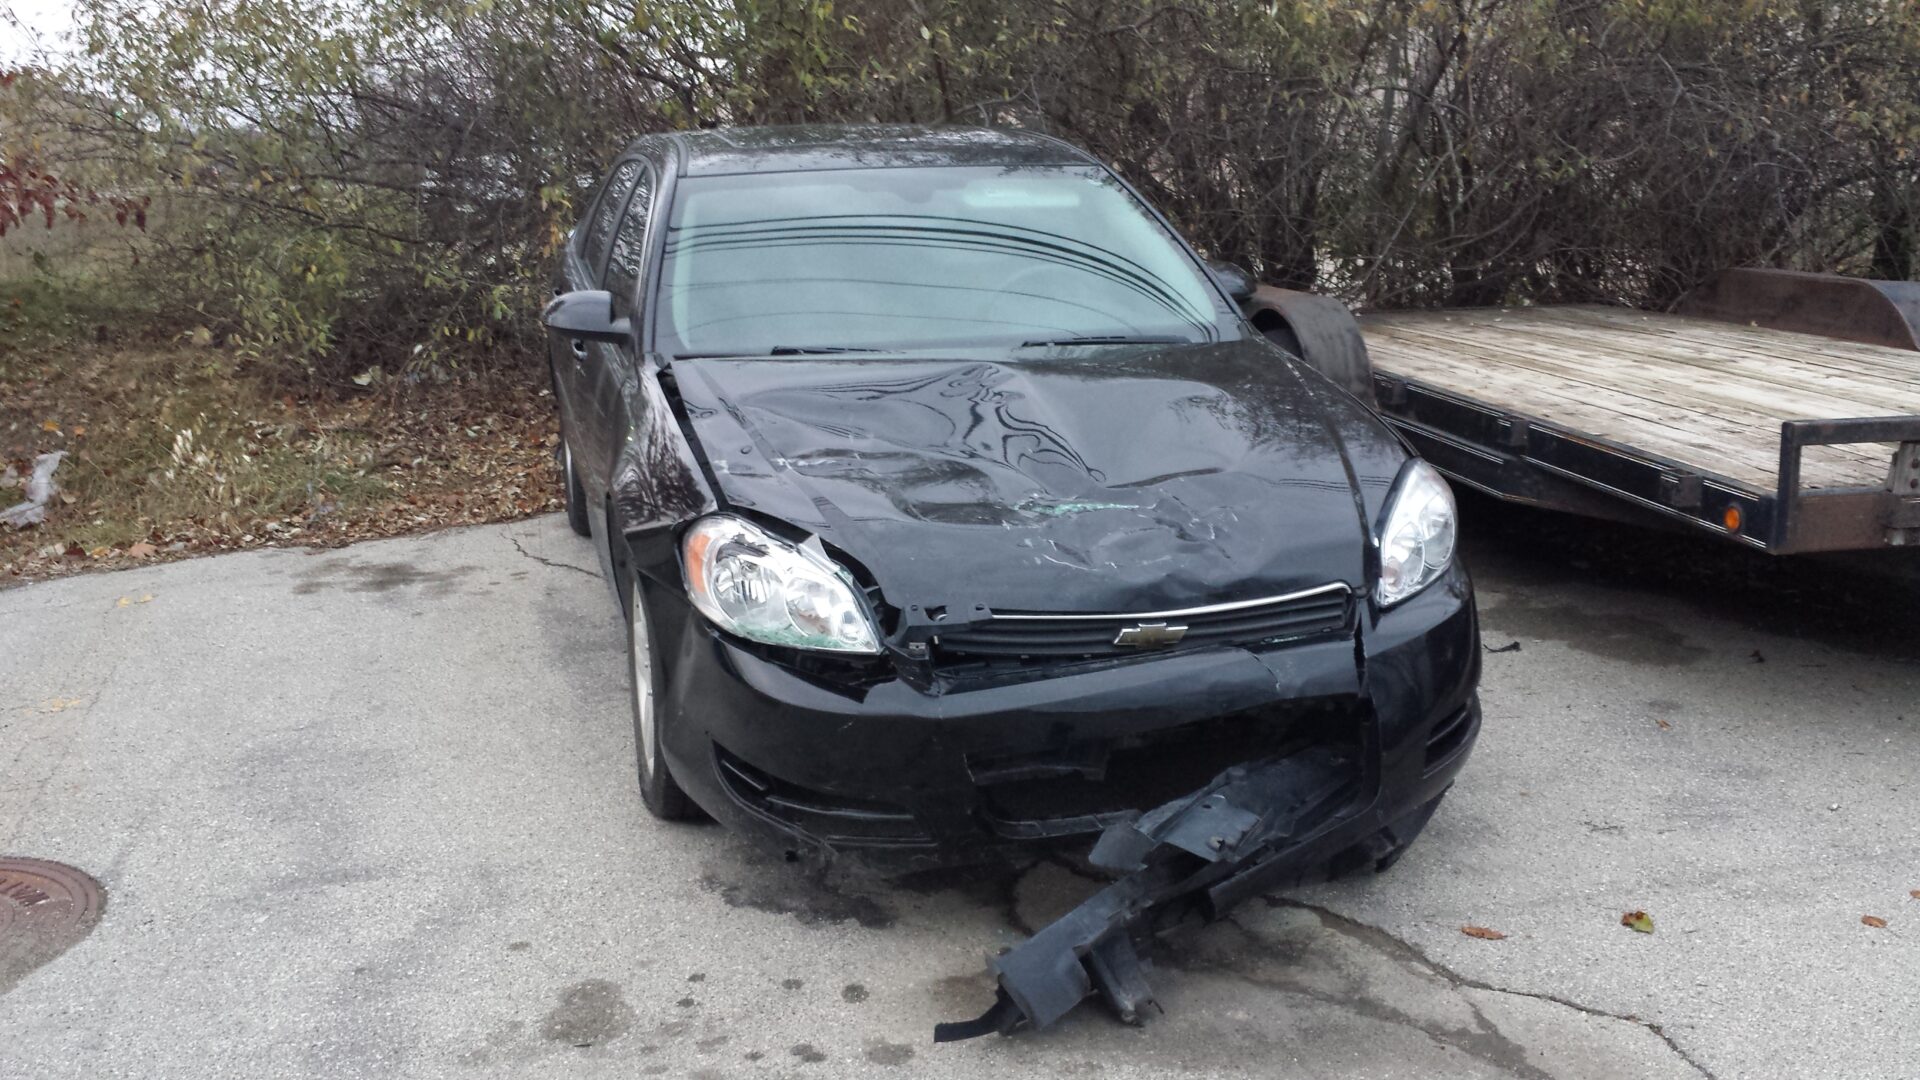 Collision damaged vehicle